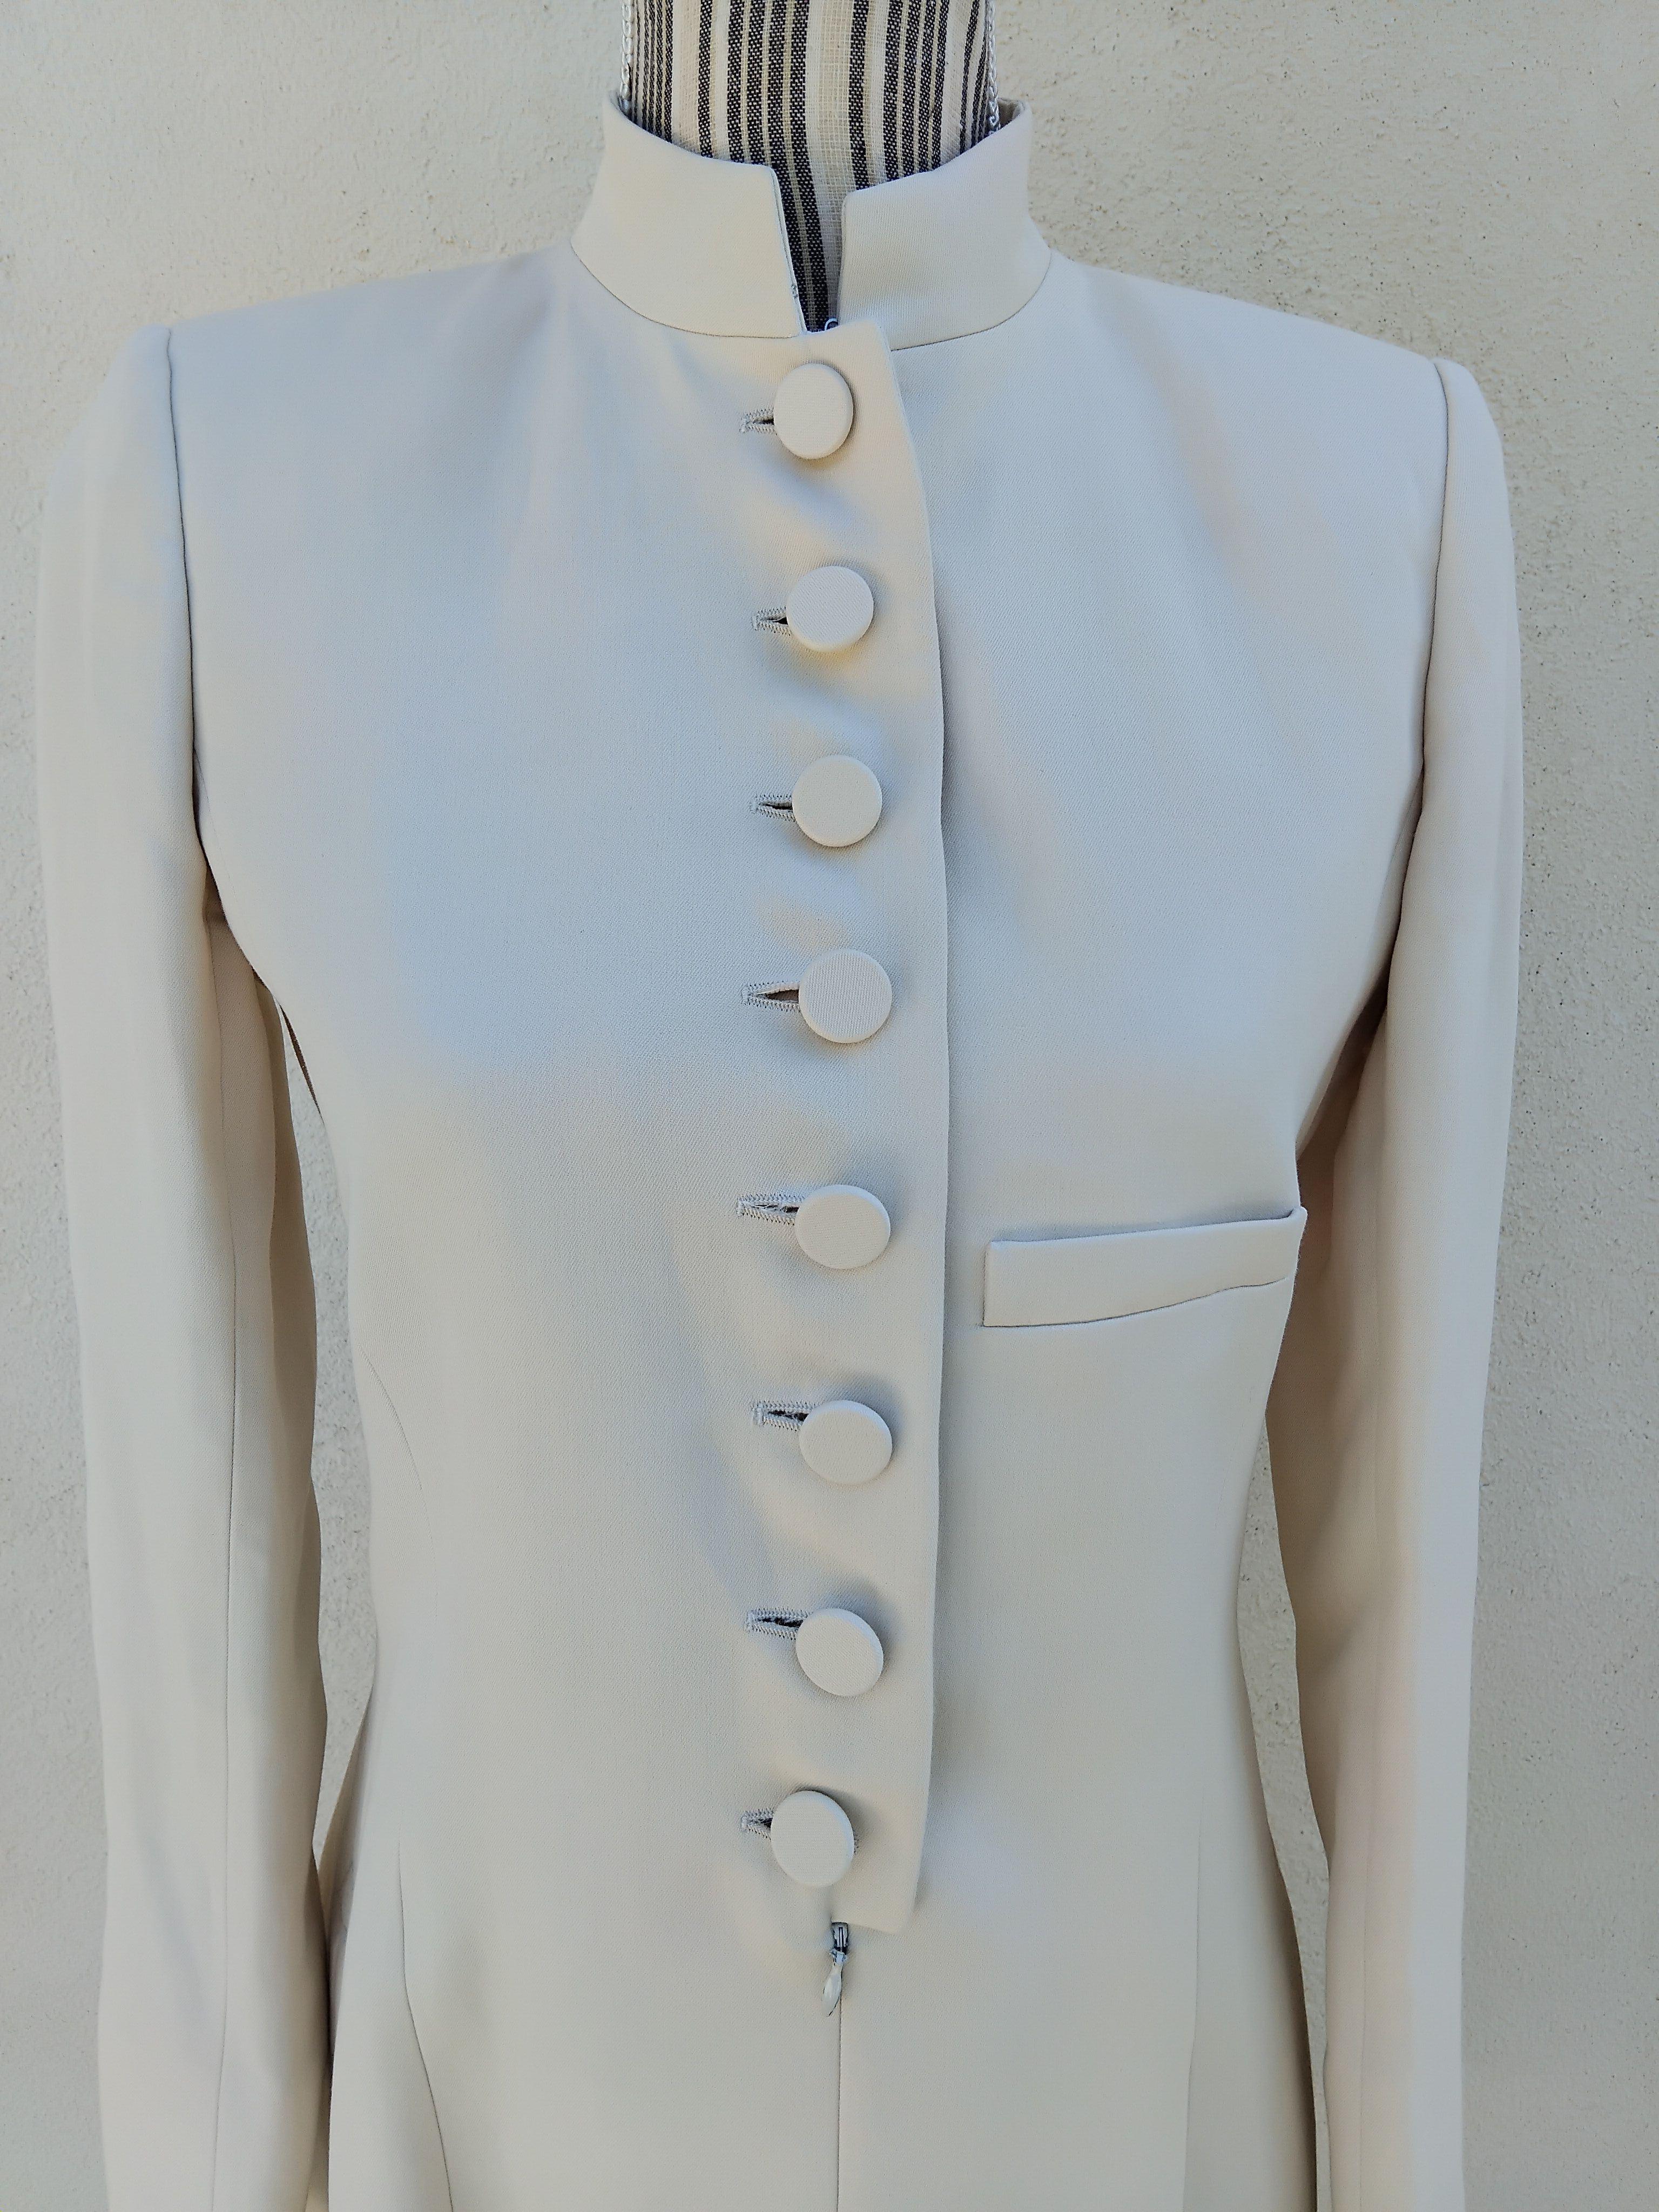 Gorgeous Hermès Spring Coat Ivory Mao Collar Size 36 FR 2-4 US For Sale 5